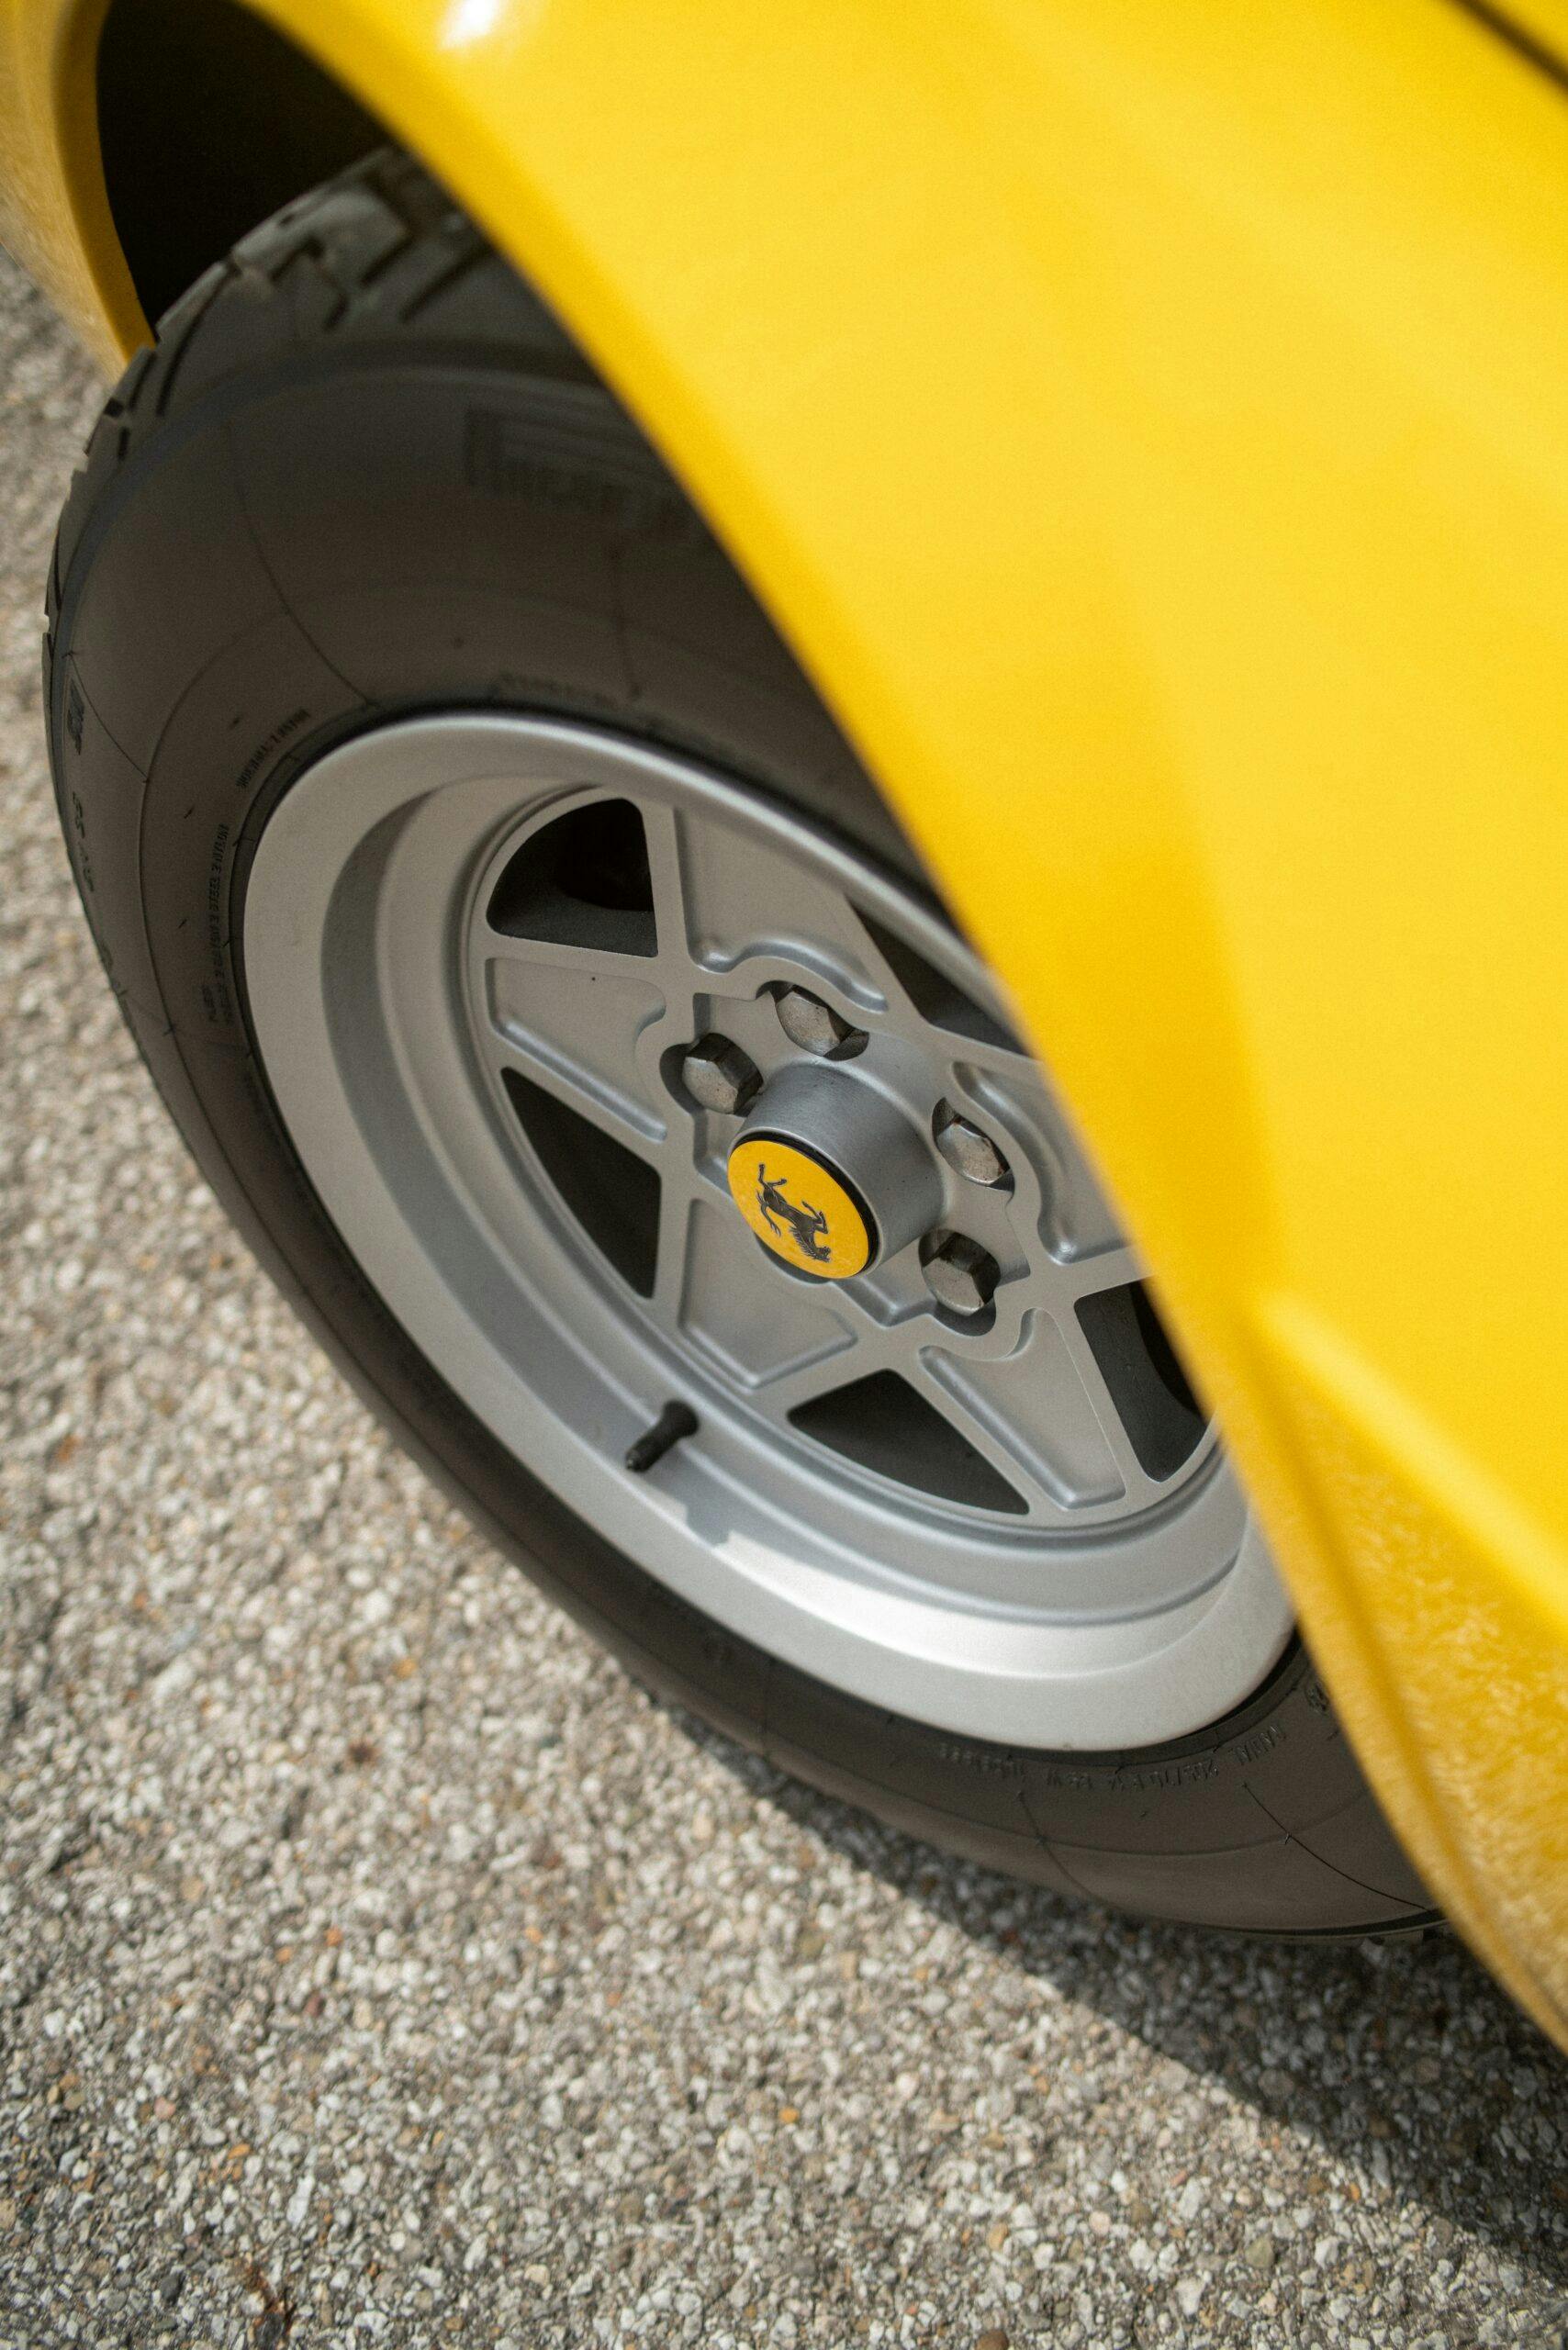 1975 Ferrari Dino 308 GT4 wheel tire detail vertical high angle